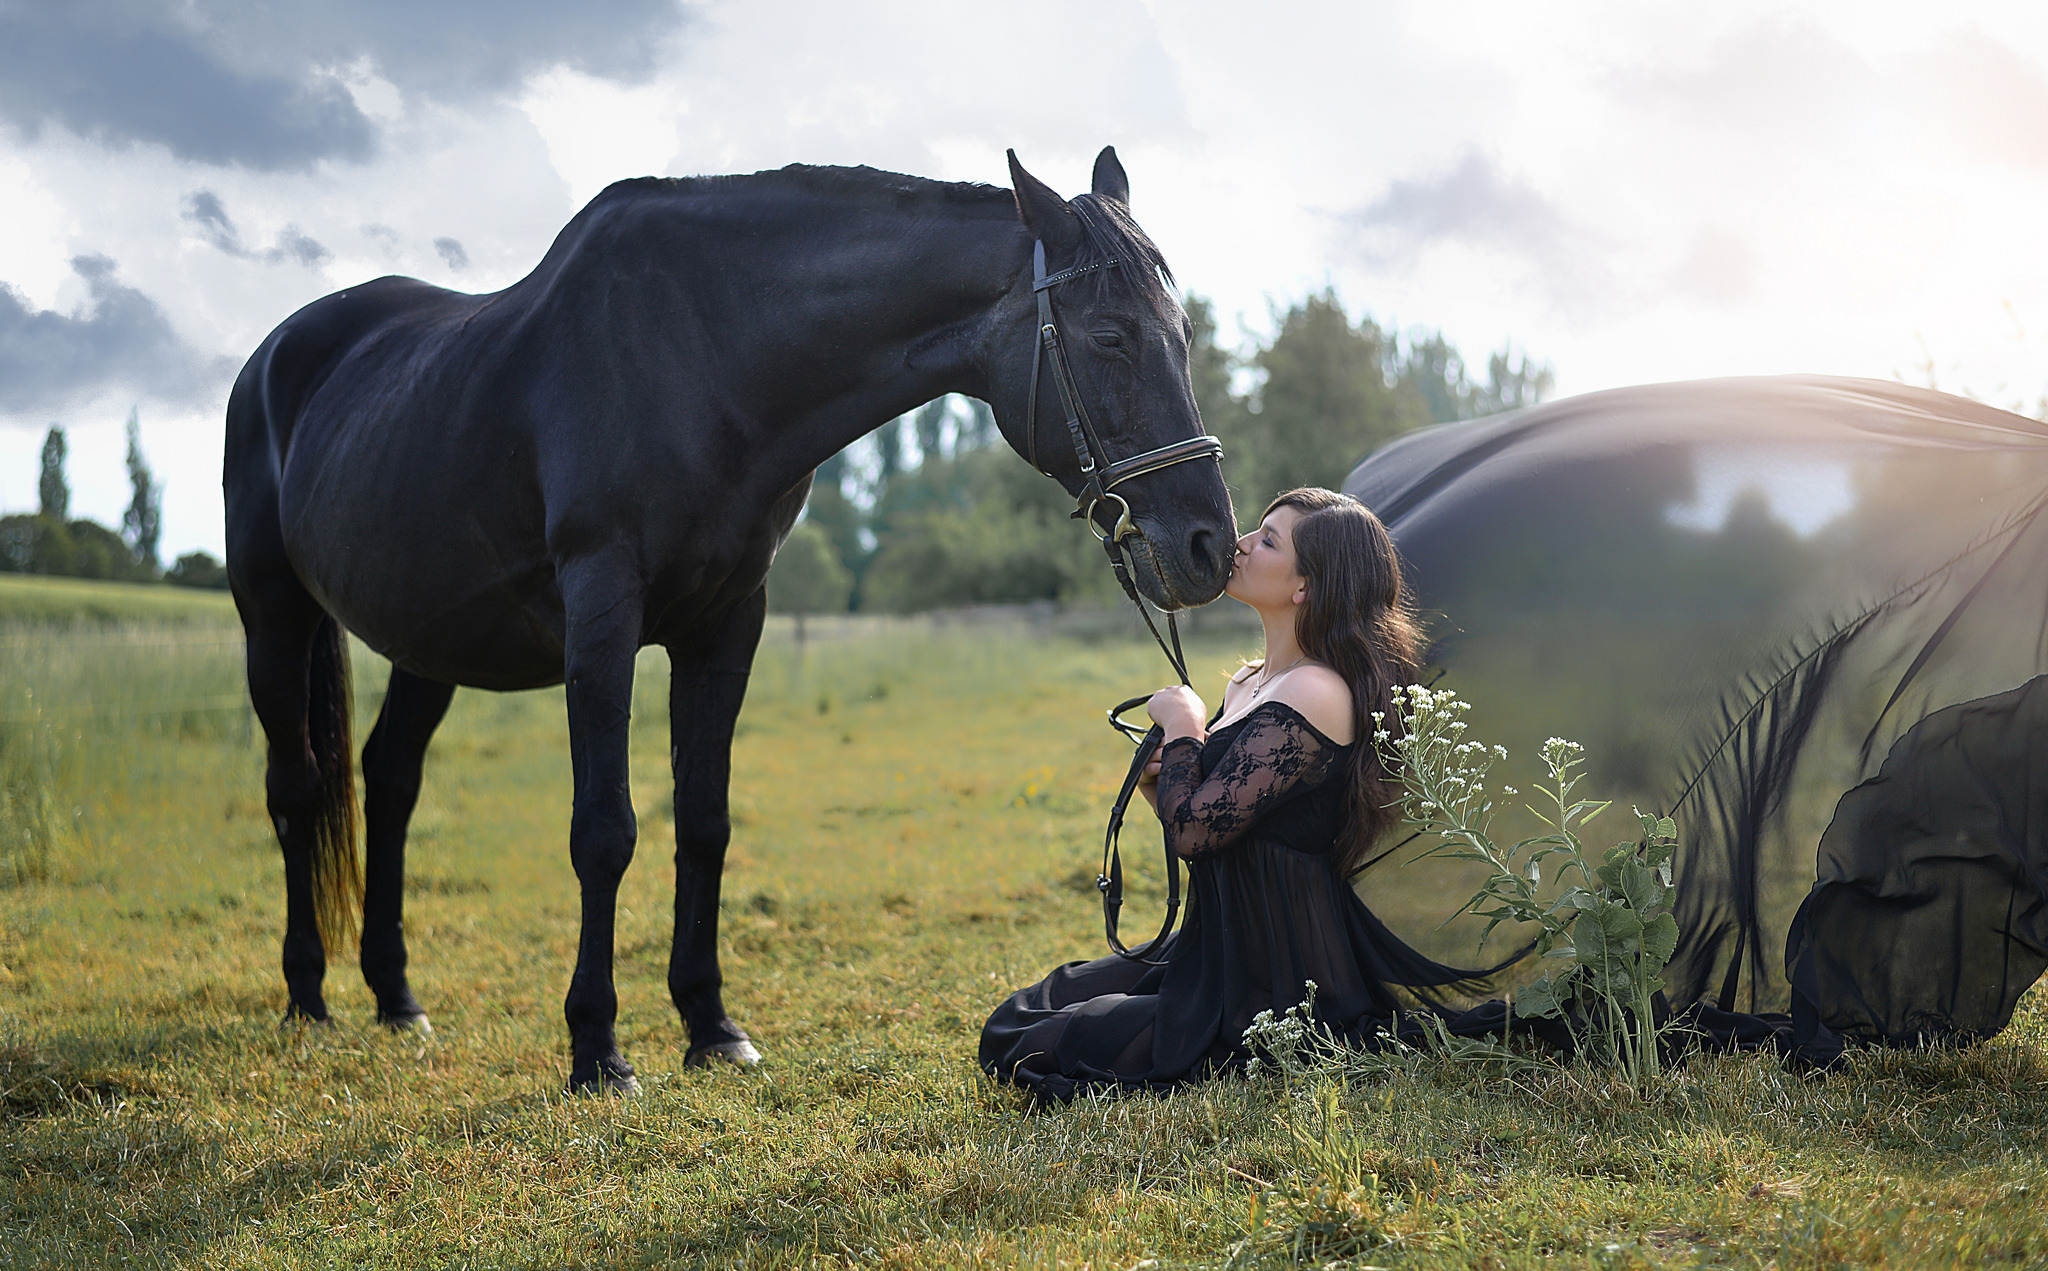 Сойти с лошади. Фотосессия с лошадьми. Фотосессия с лошадьми на природе. Девушка на коне. Фотосет с лошадью.